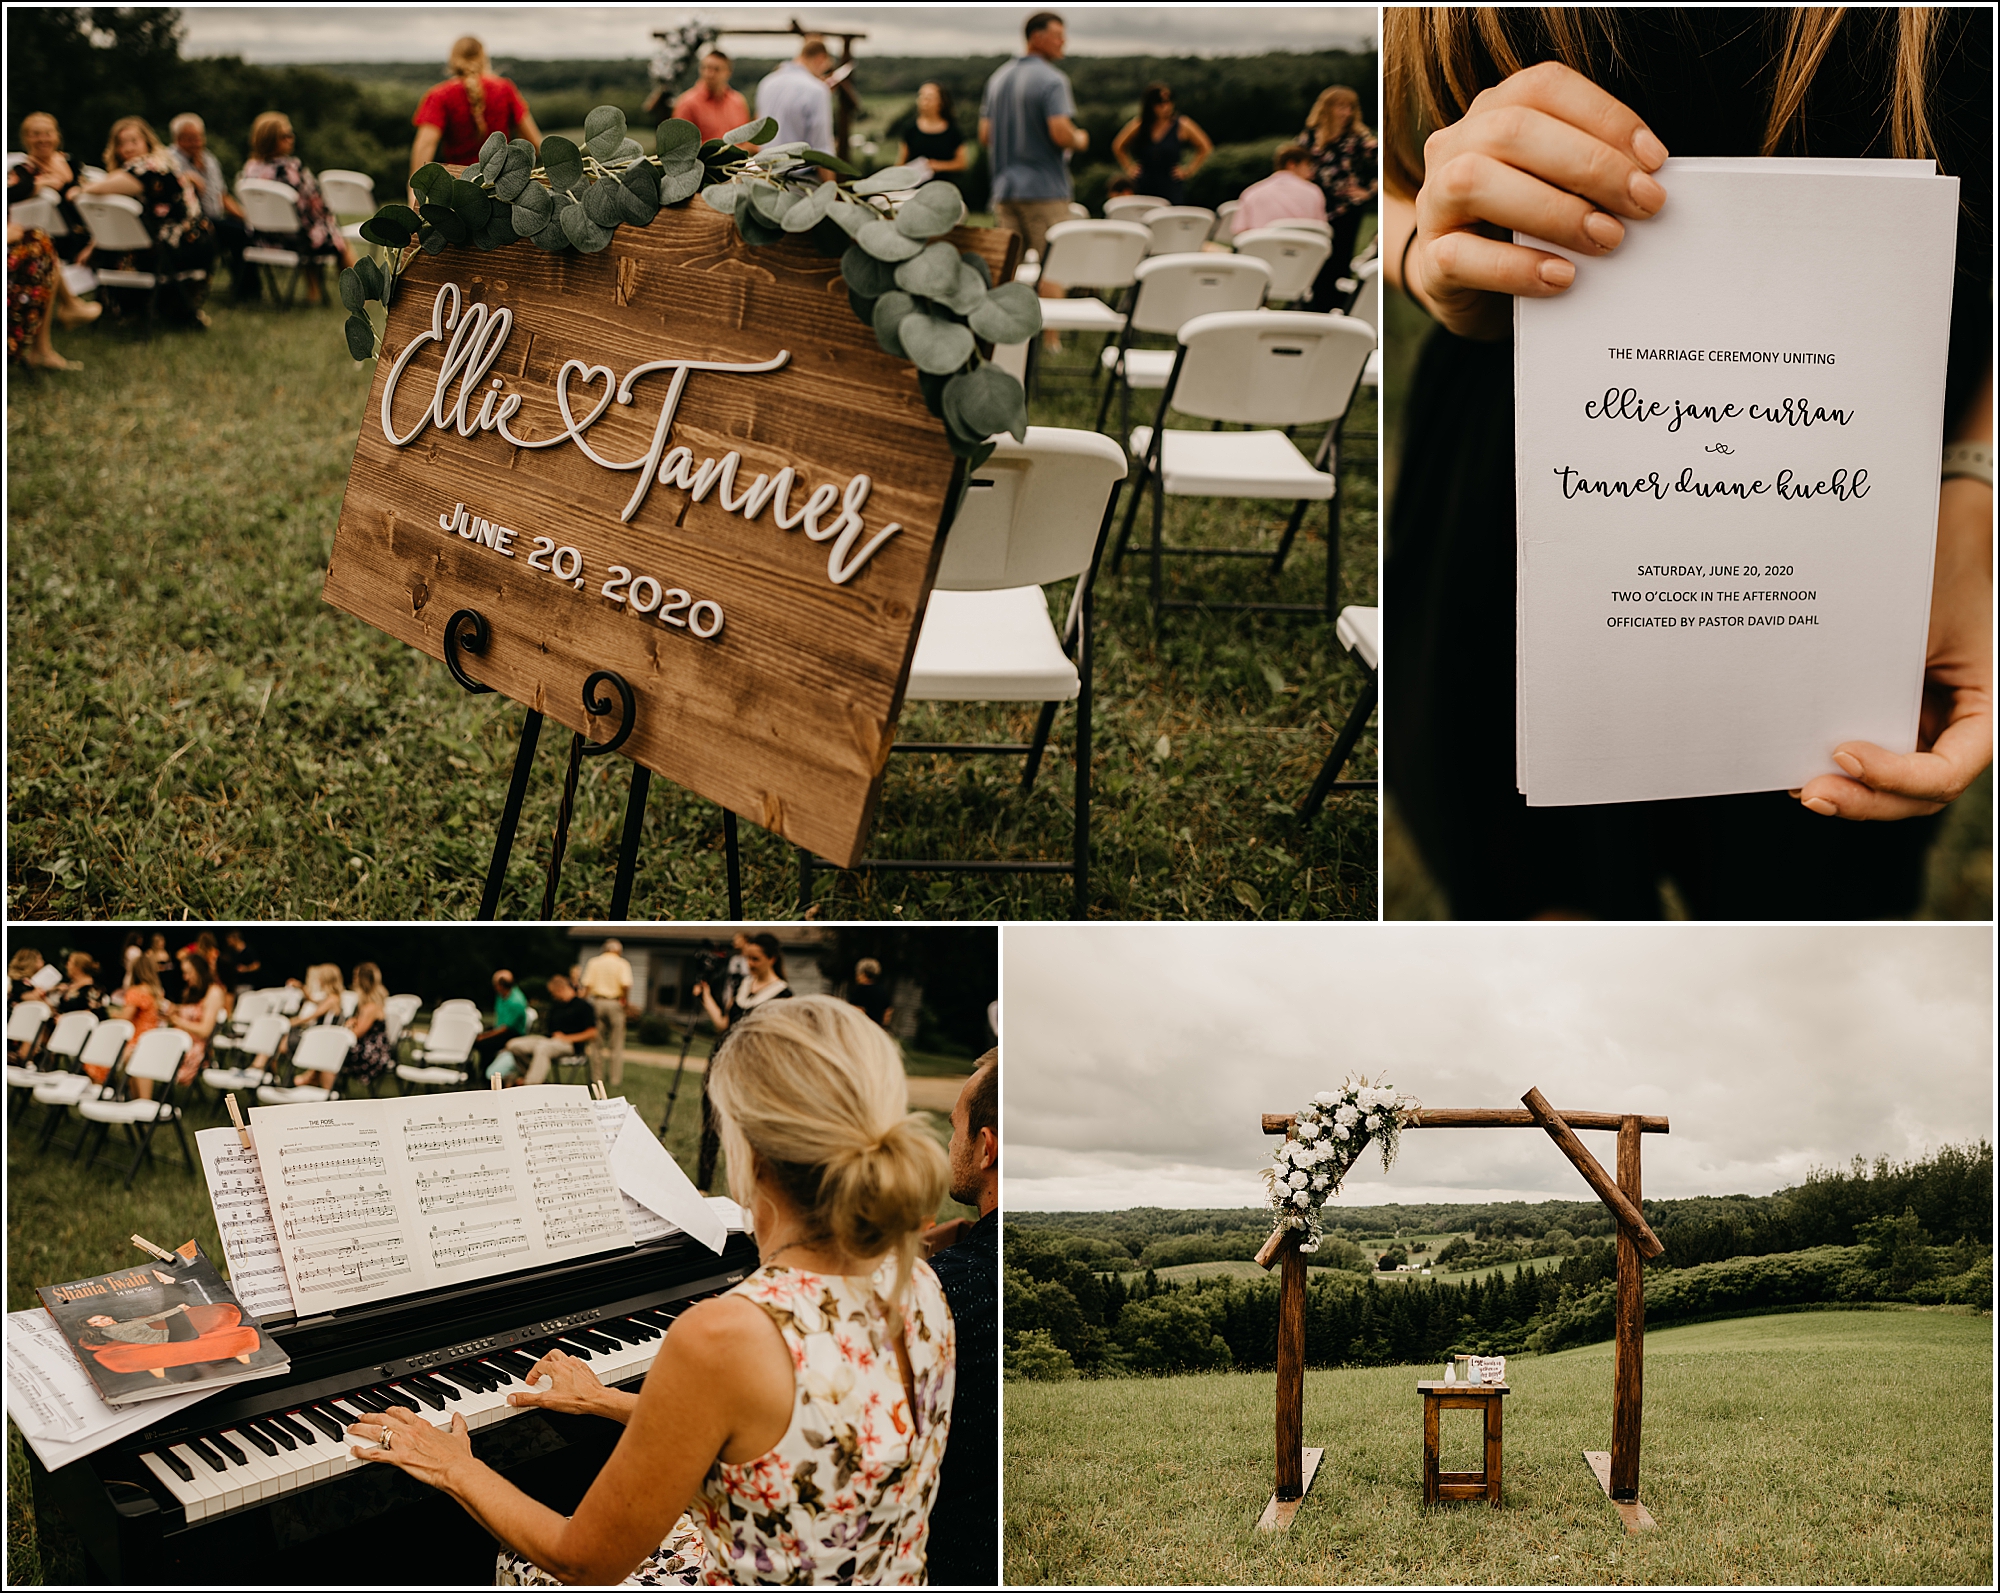 La Crosse, WI Wedding photographer outdoor ceremony details sign, program, arch, pianist